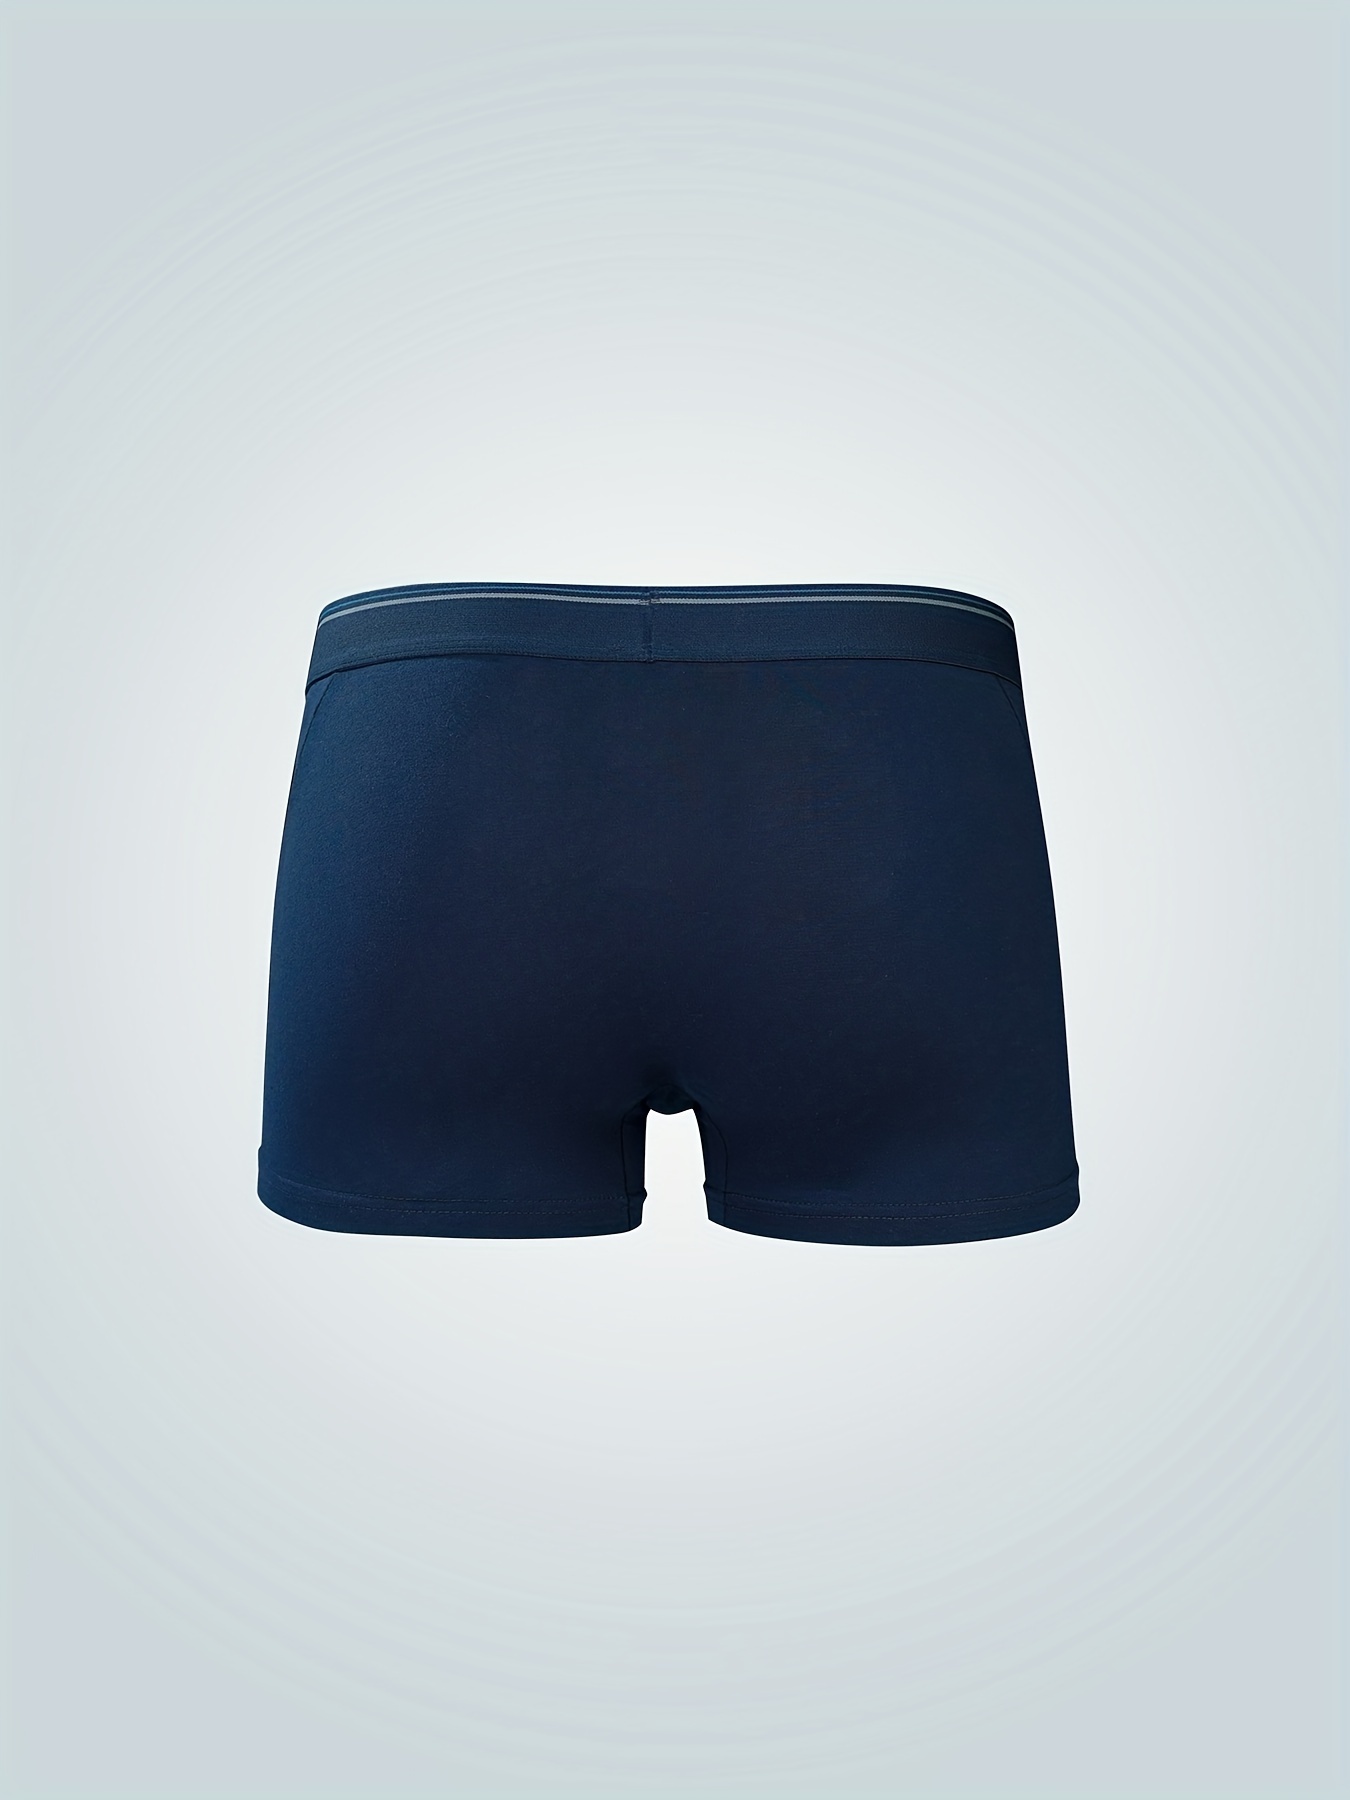 youlehe Men's Underwear Soft Rayon Boxer Briefs Stretch Trunks